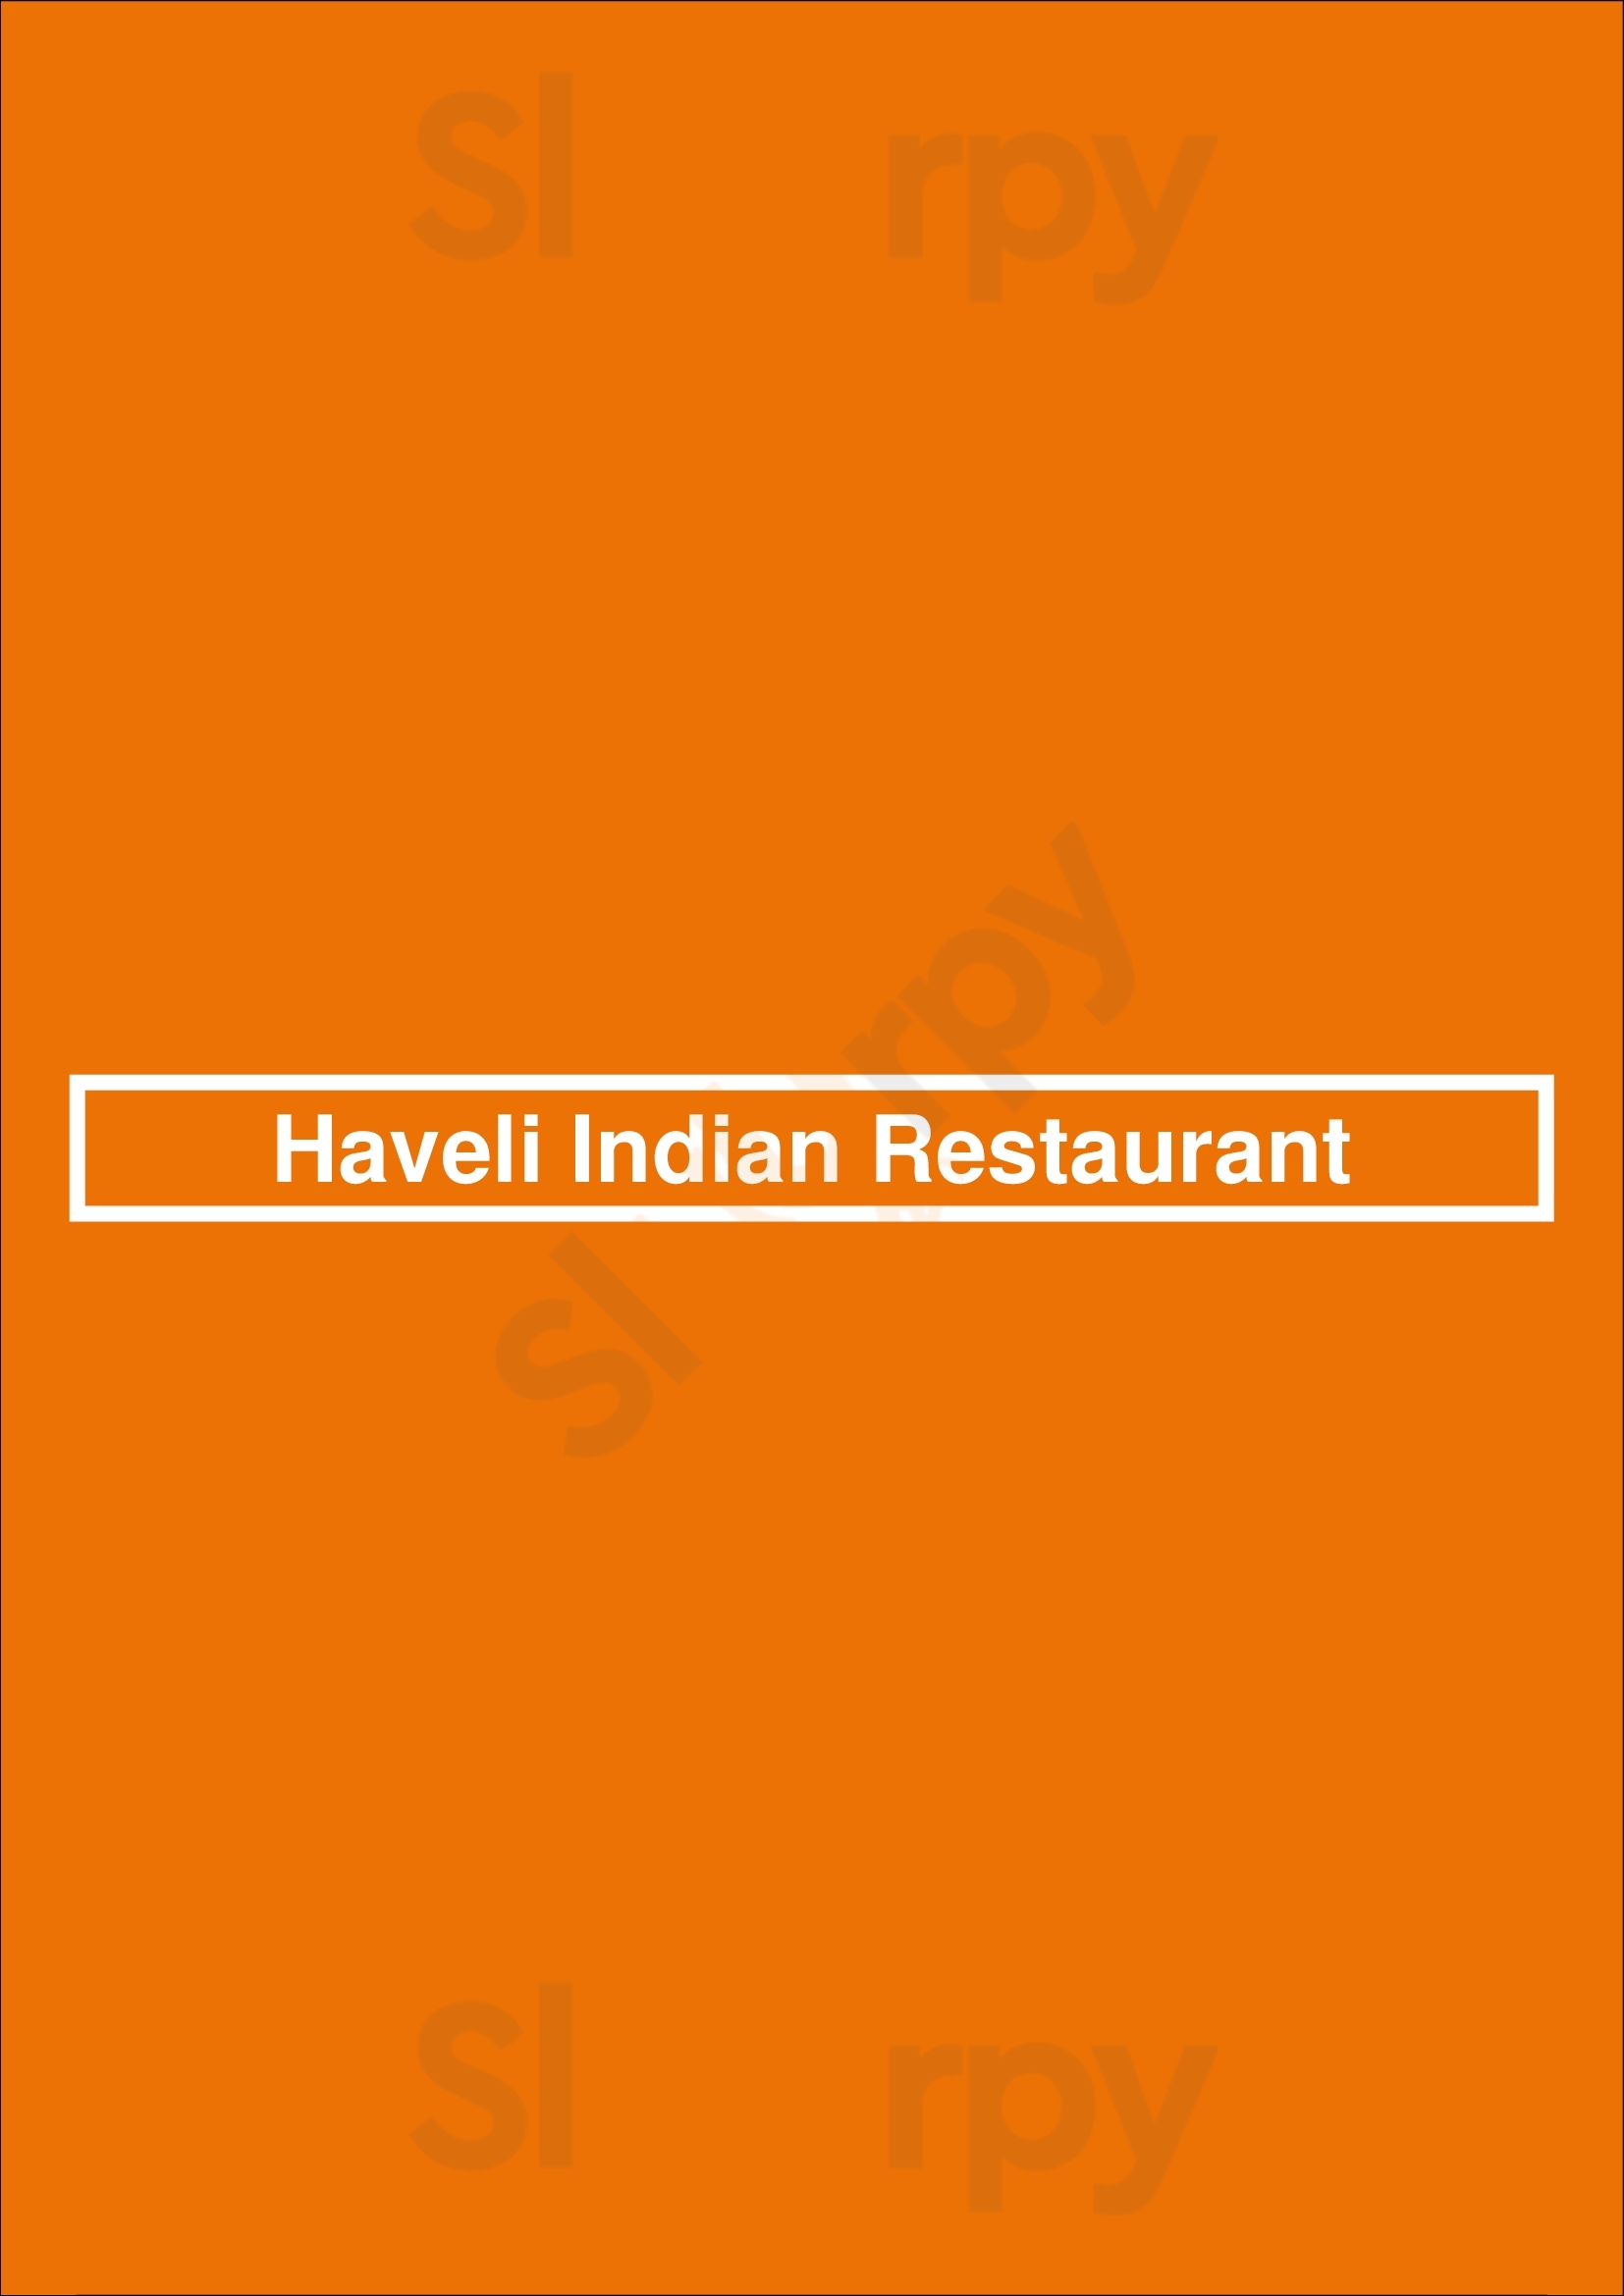 Haveli Indian Restaurant Saint Louis Menu - 1